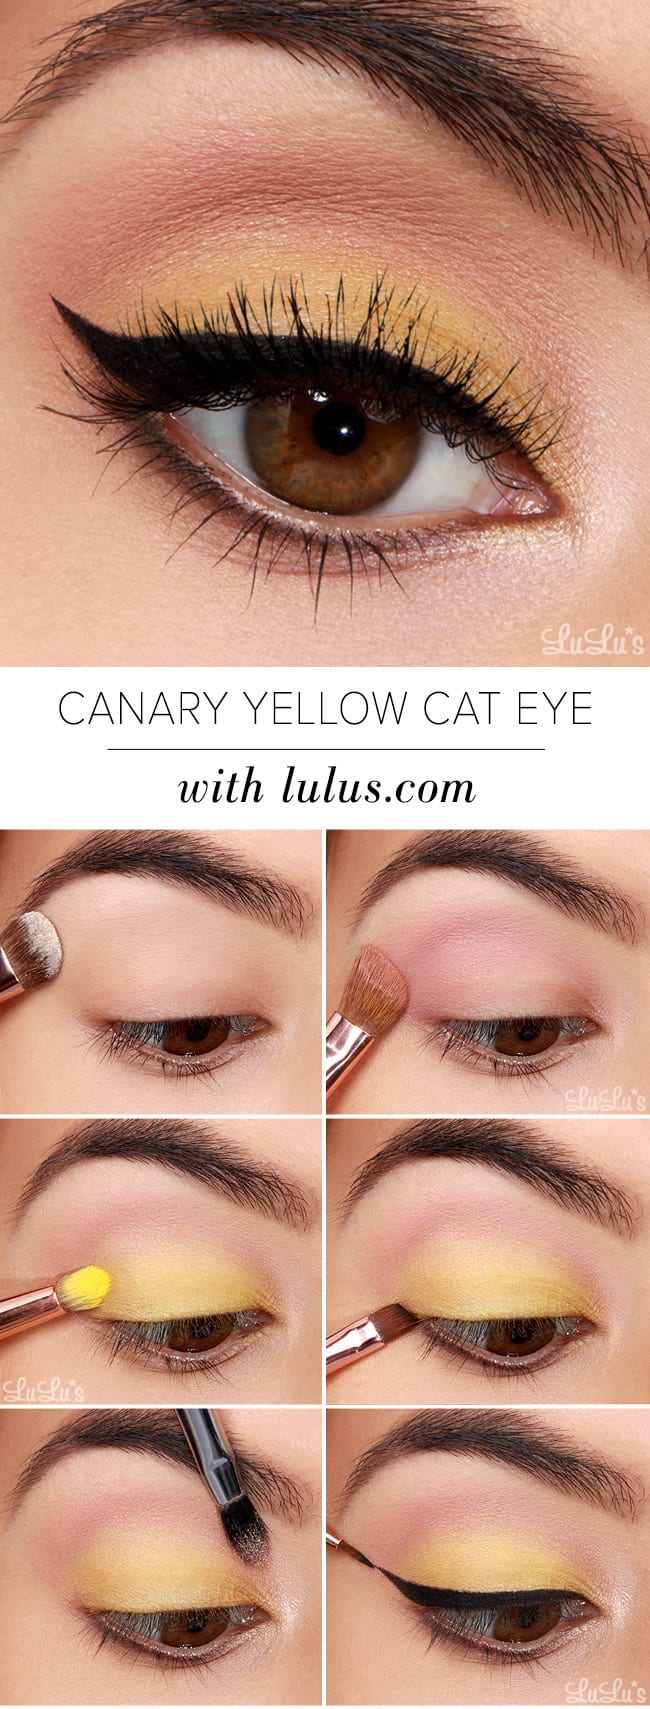 Canary Yellow Eye Makeup Tutorial